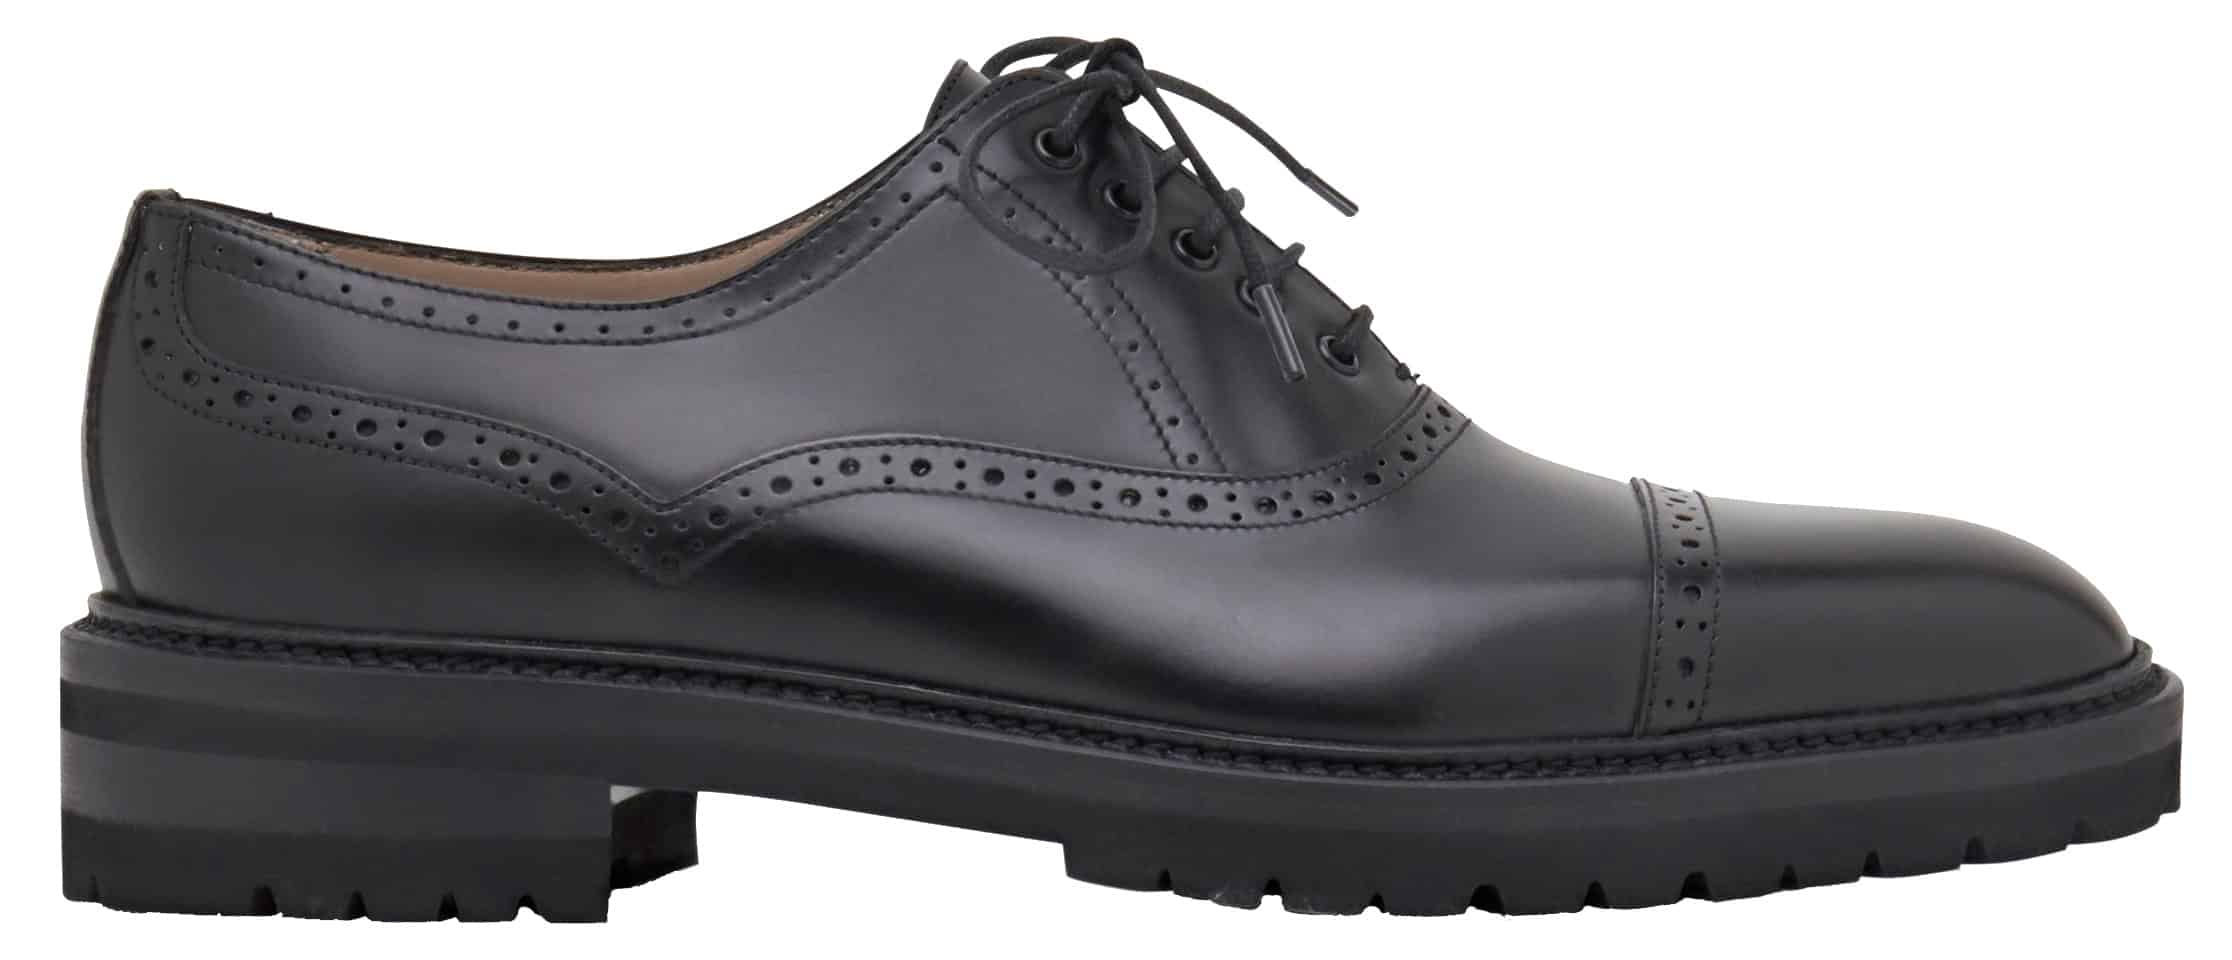 Manolo Blahnik Norton leather Oxford shoes